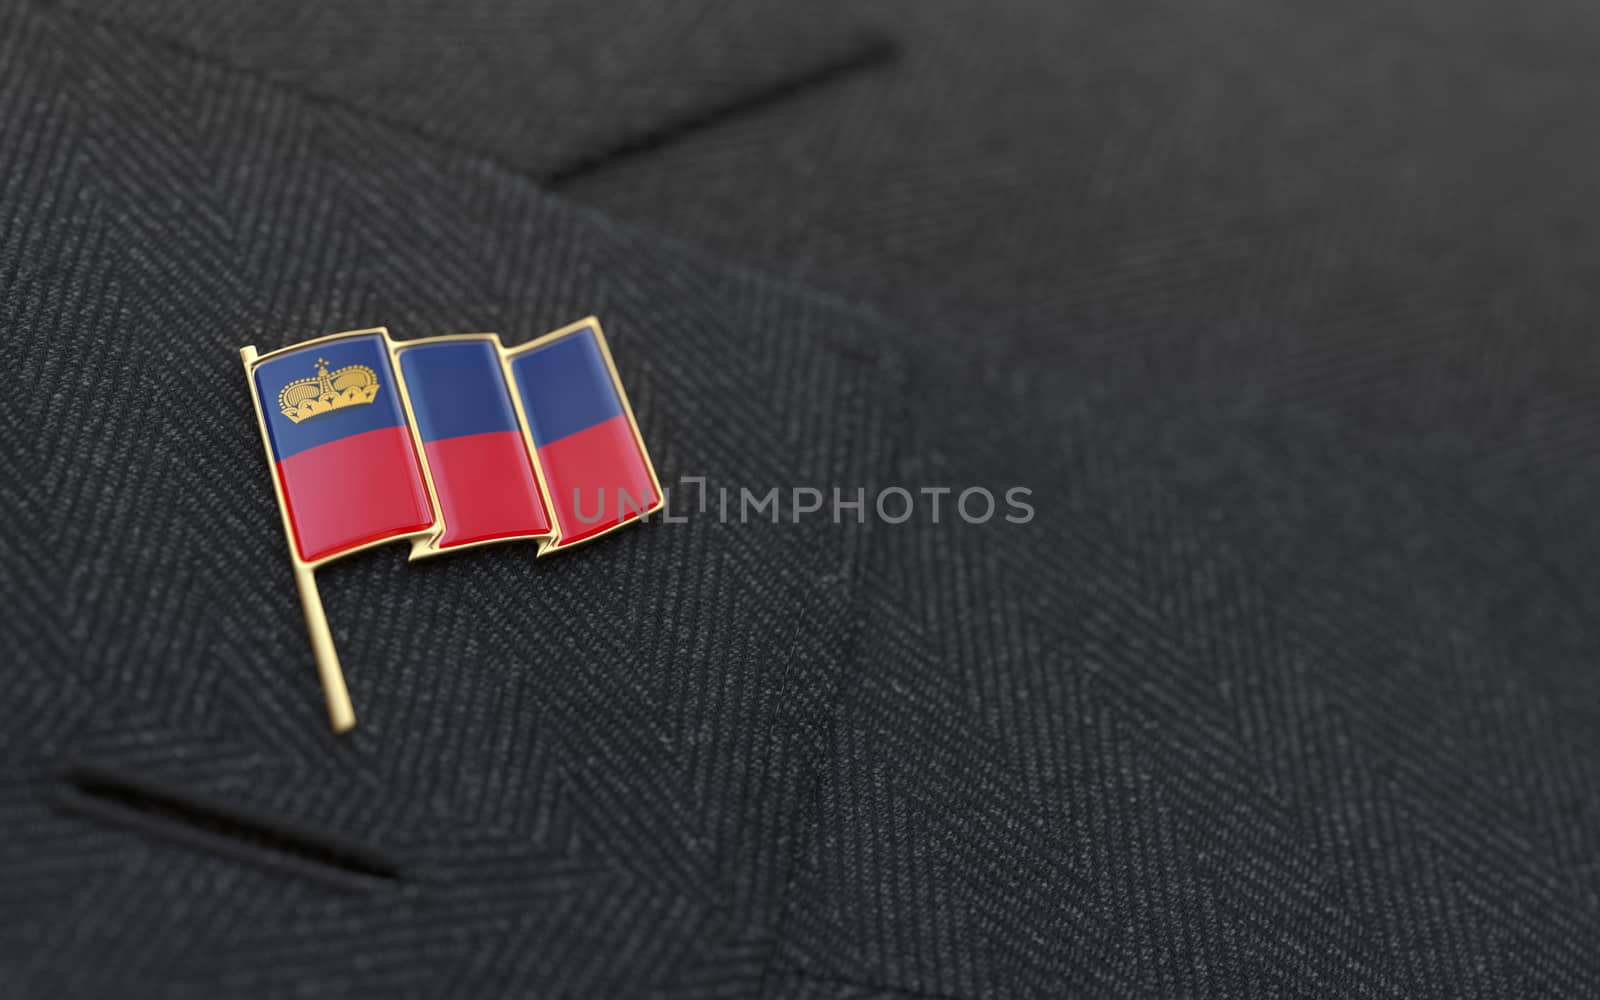 Liechtenstein flag lapel pin on the collar of a business suit by Barbraford